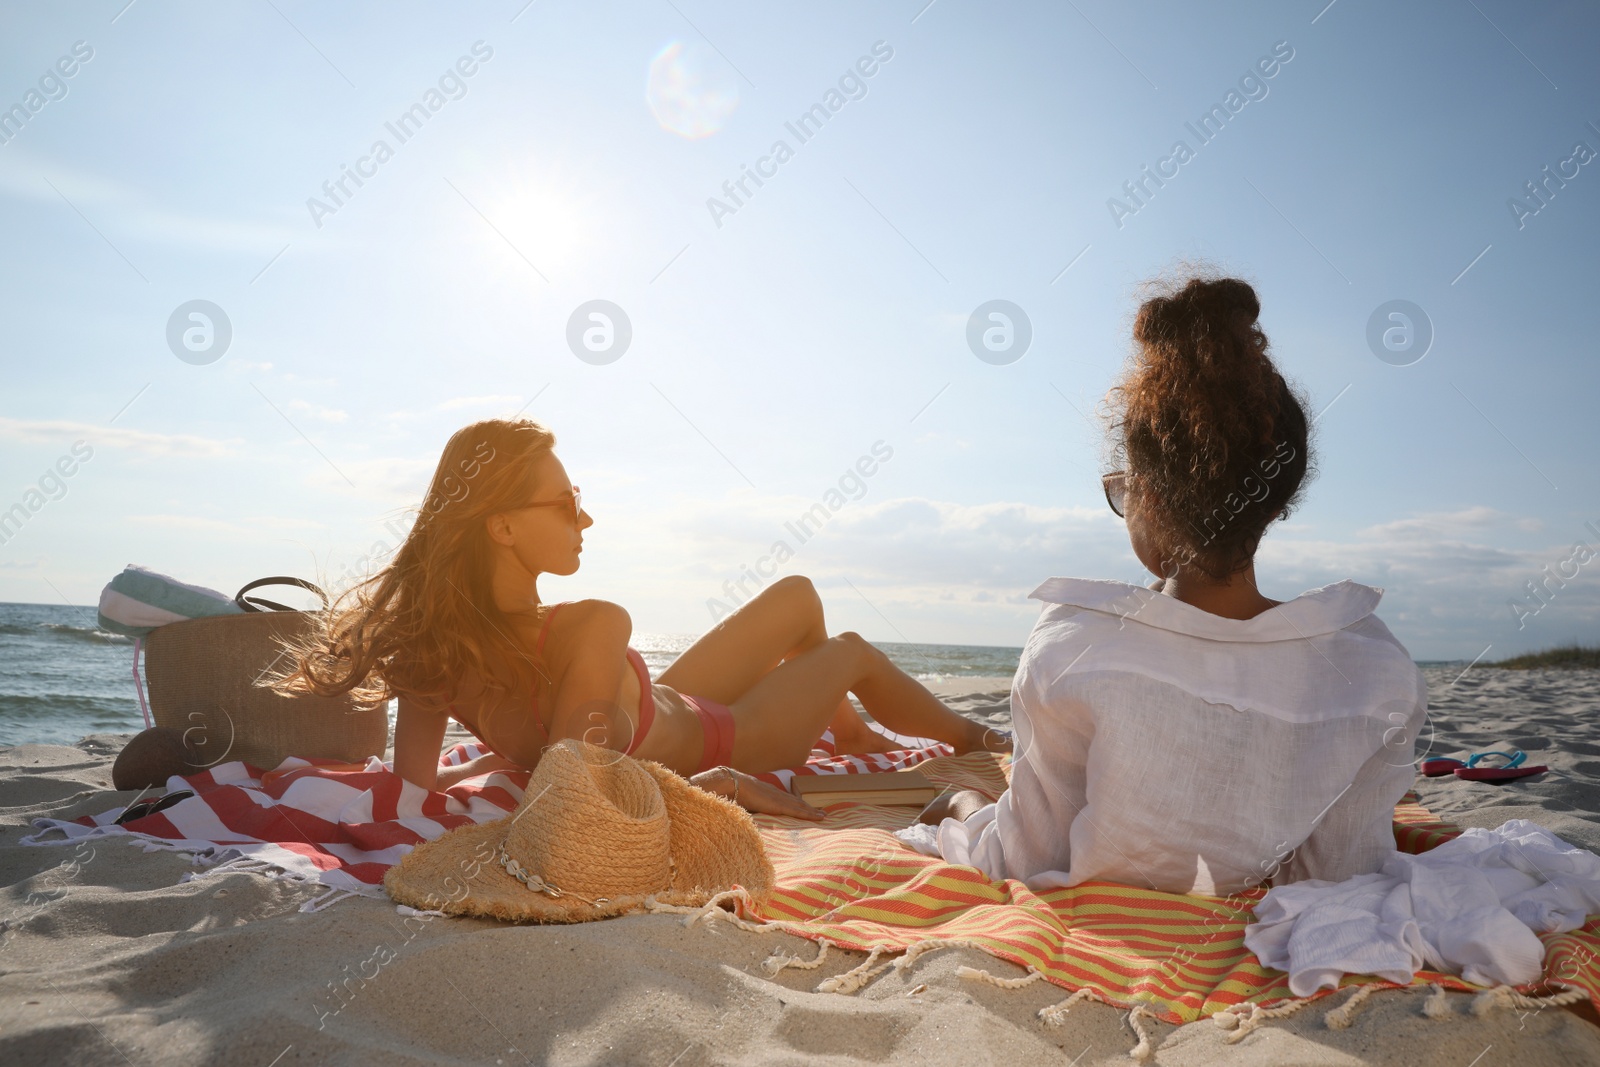 Photo of Friends lying on beach towels near sea